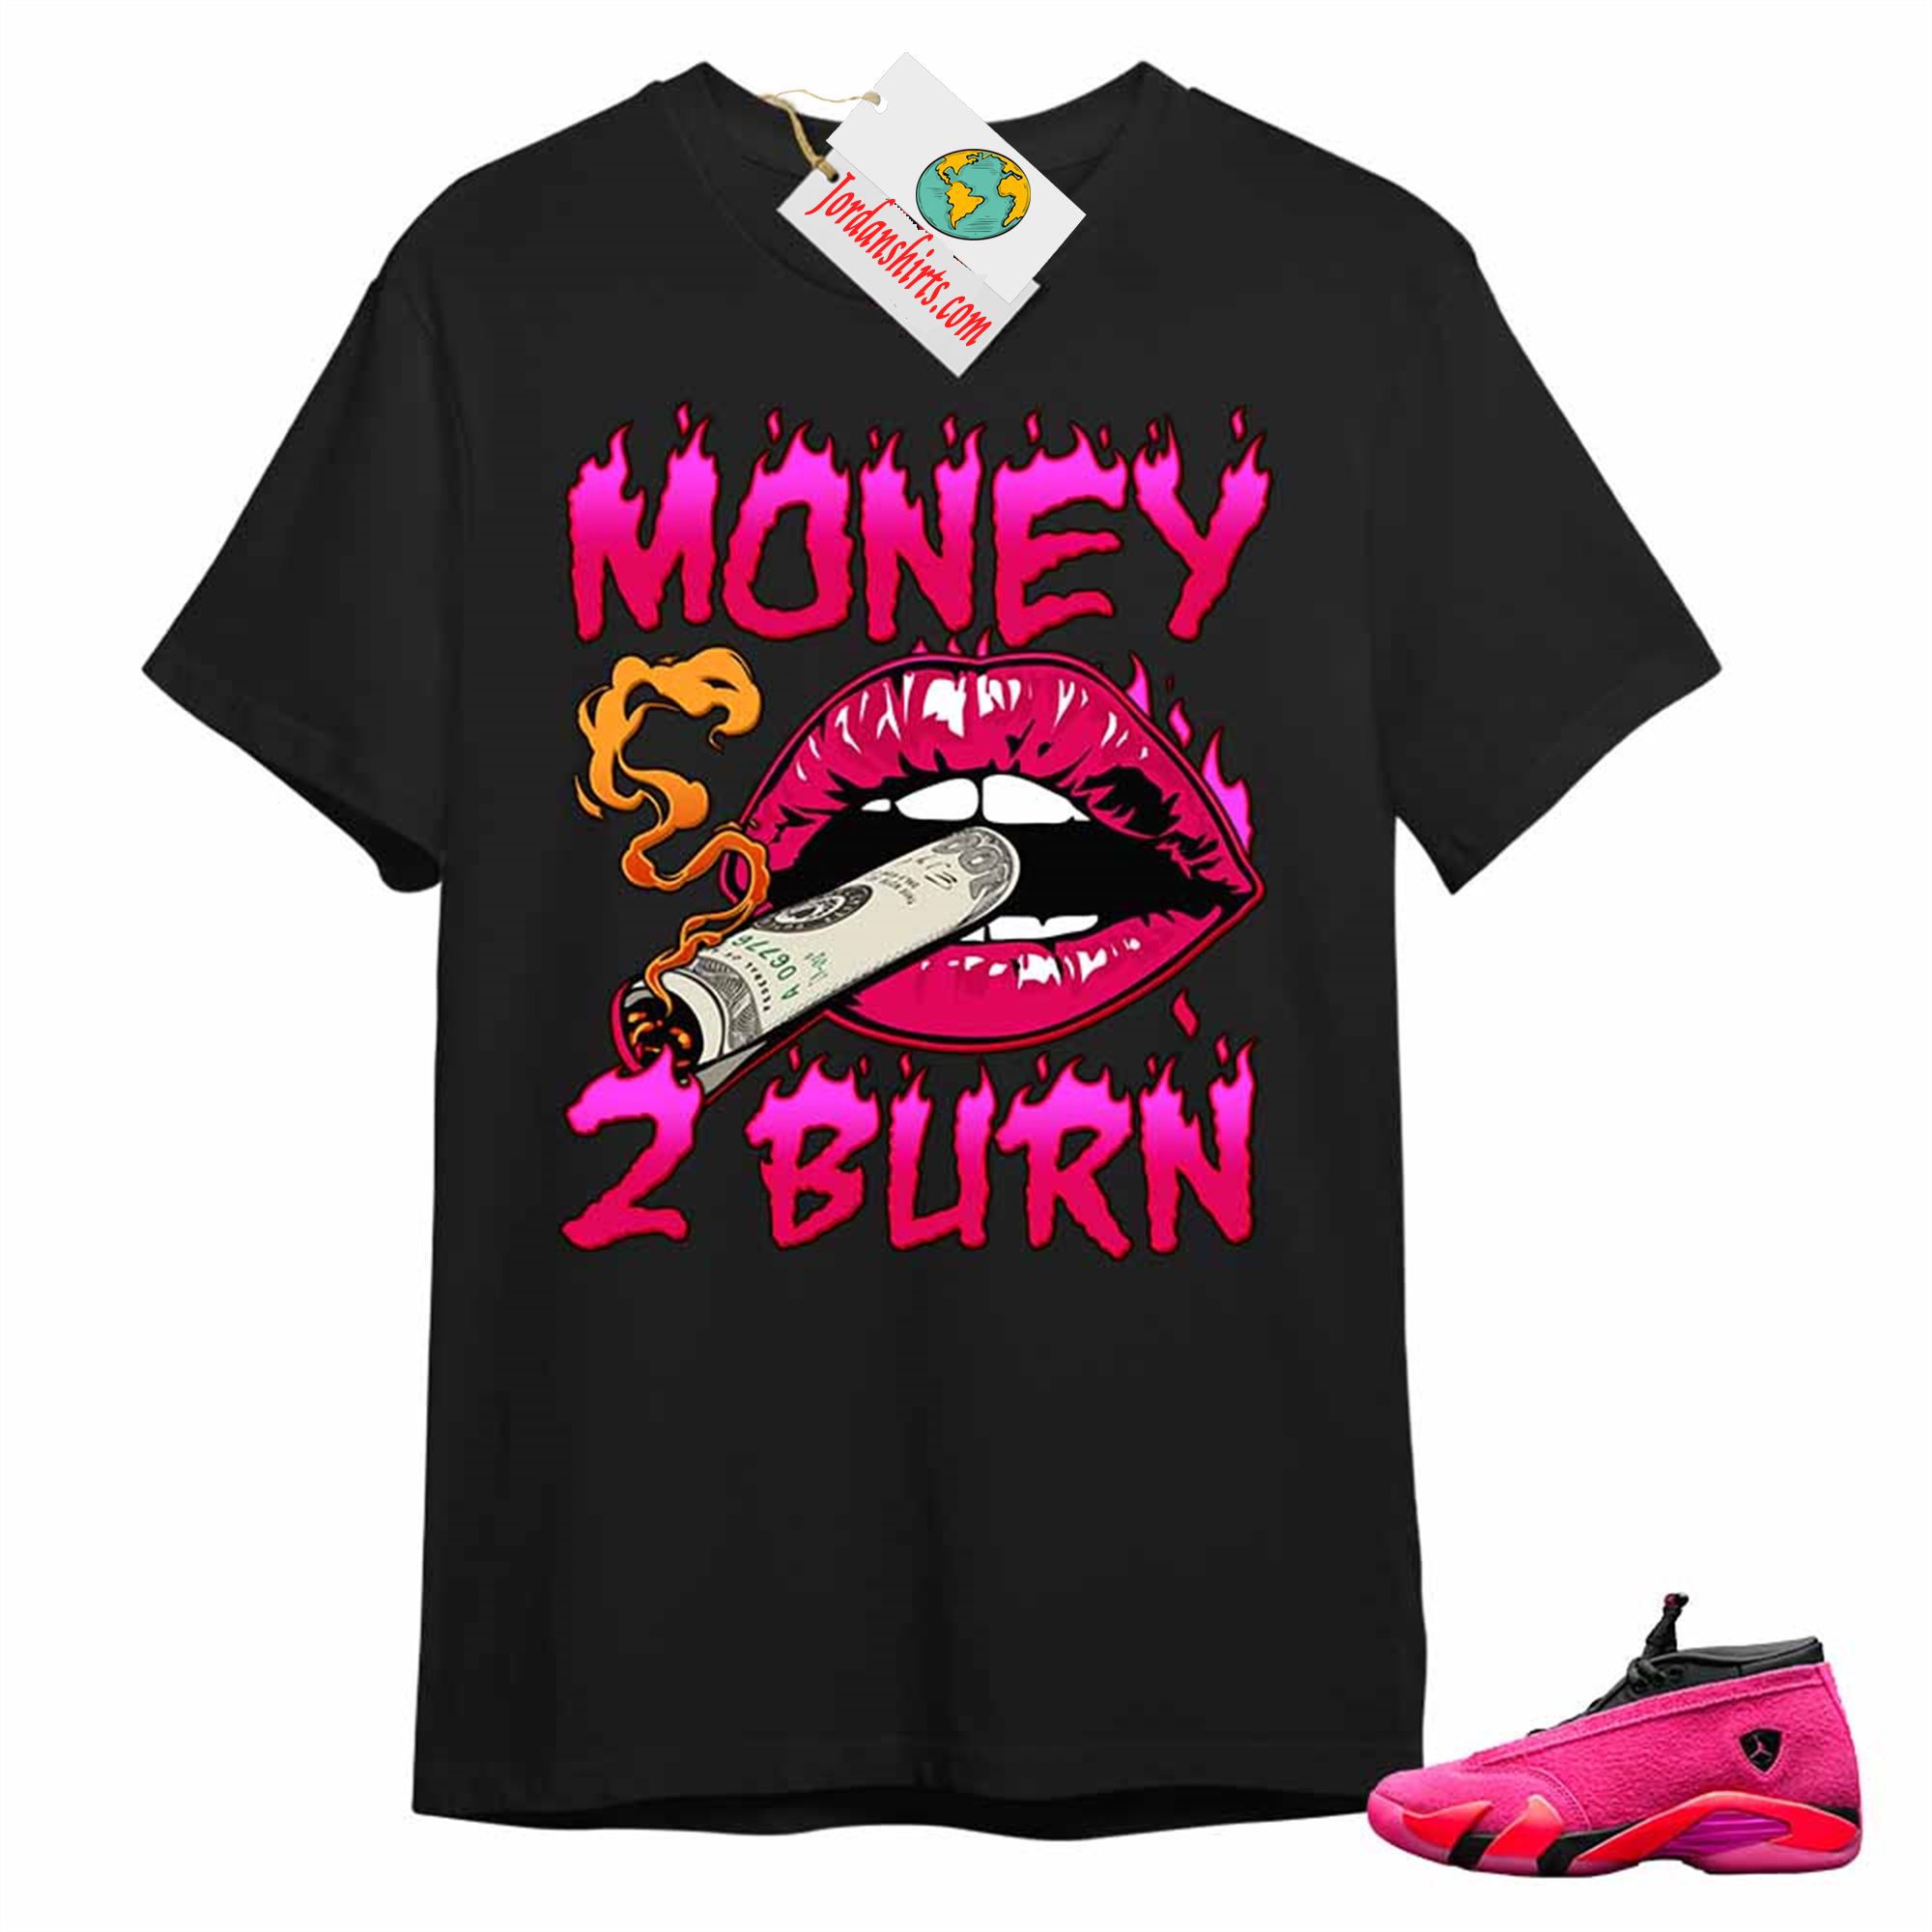 Jordan 14 Shirt, Money To Burn Black T-shirt Air Jordan 14 Wmns Shocking Pink 14s Size Up To 5xl